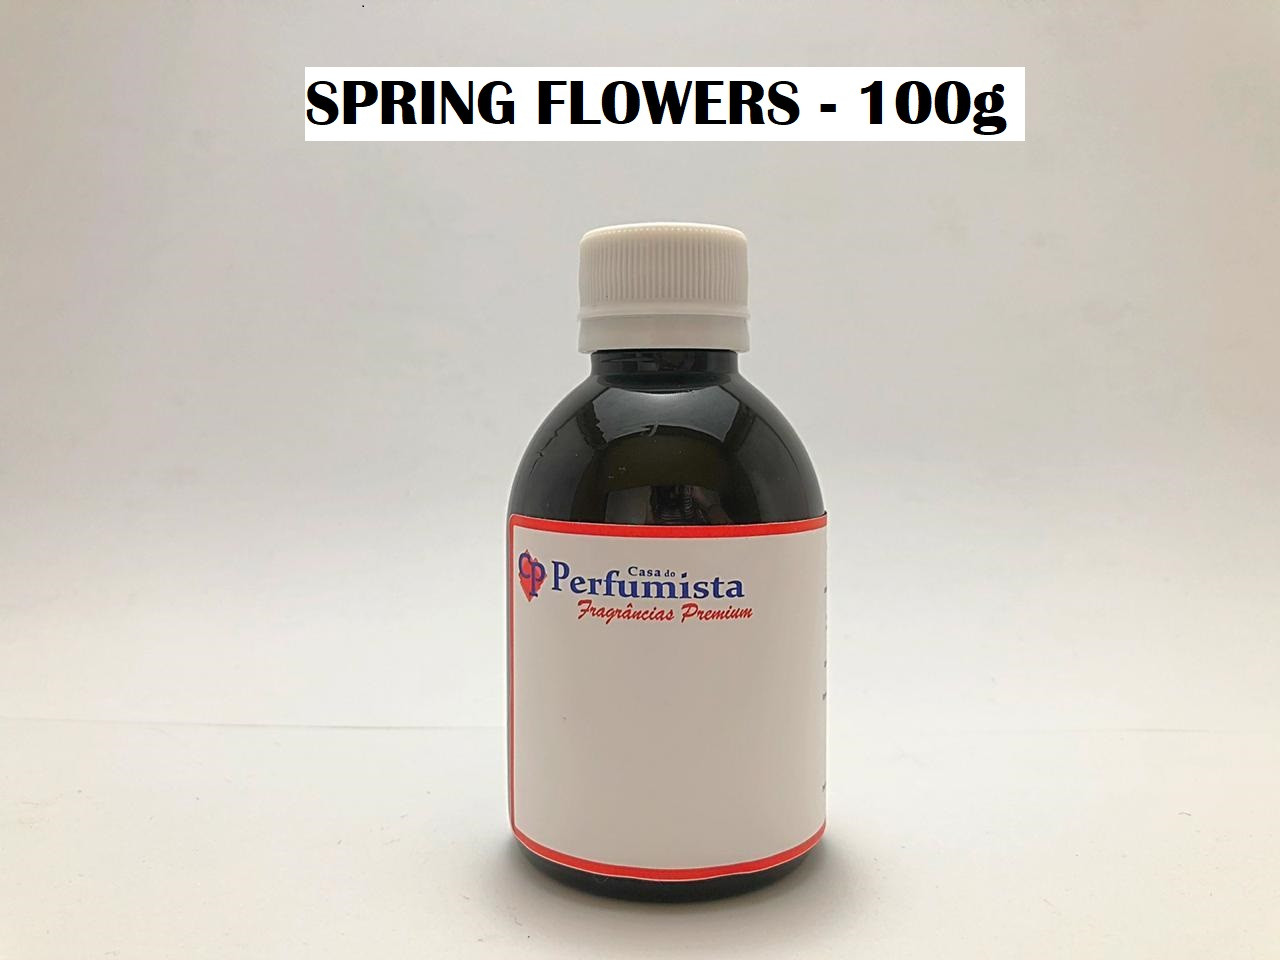 SPRING FLOWERS - 100g